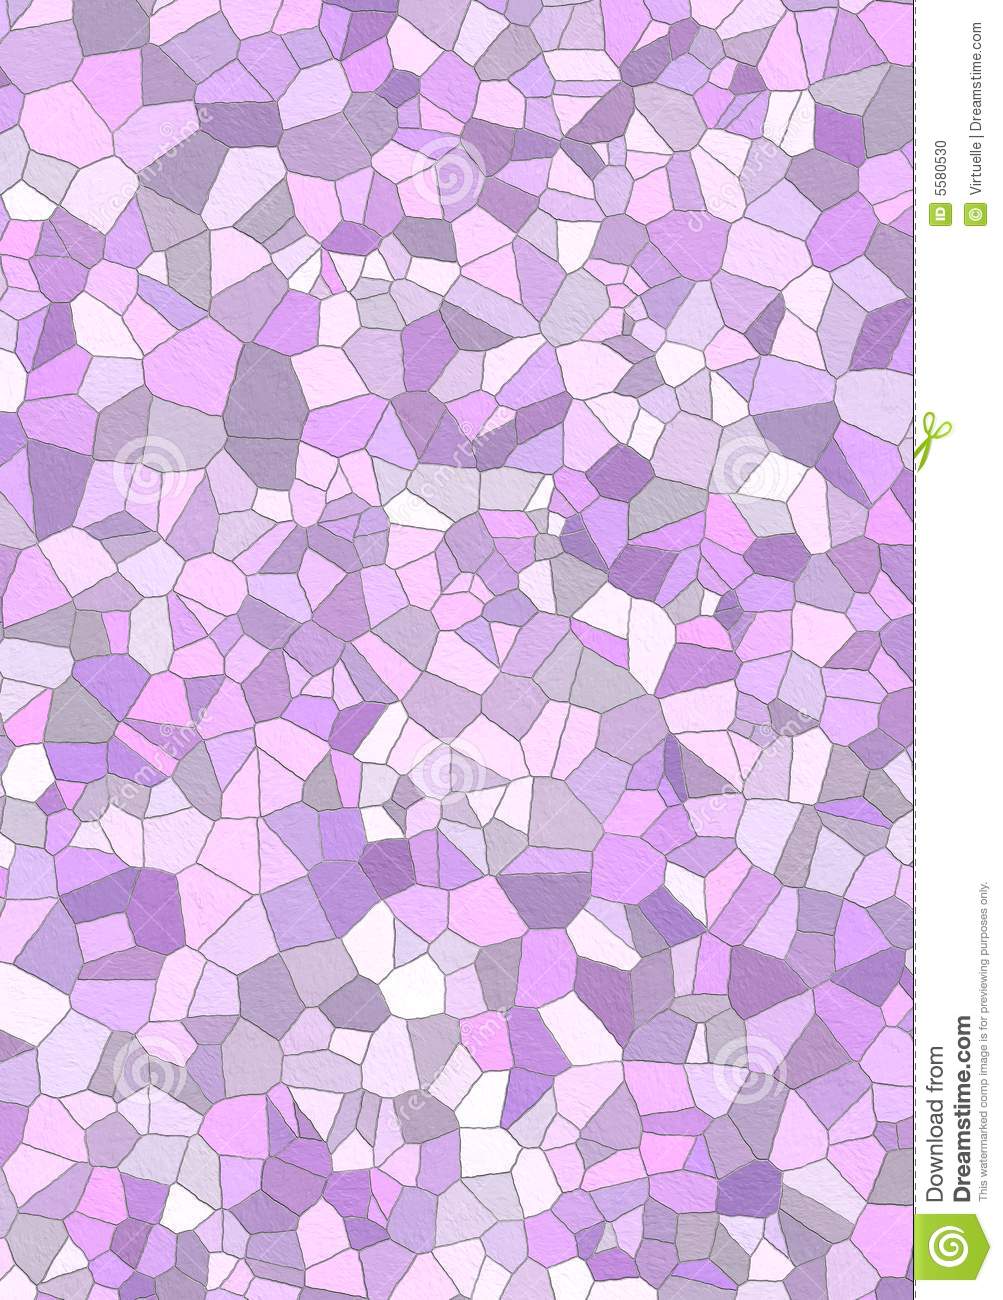 purple-mosaic-tiles-5580530